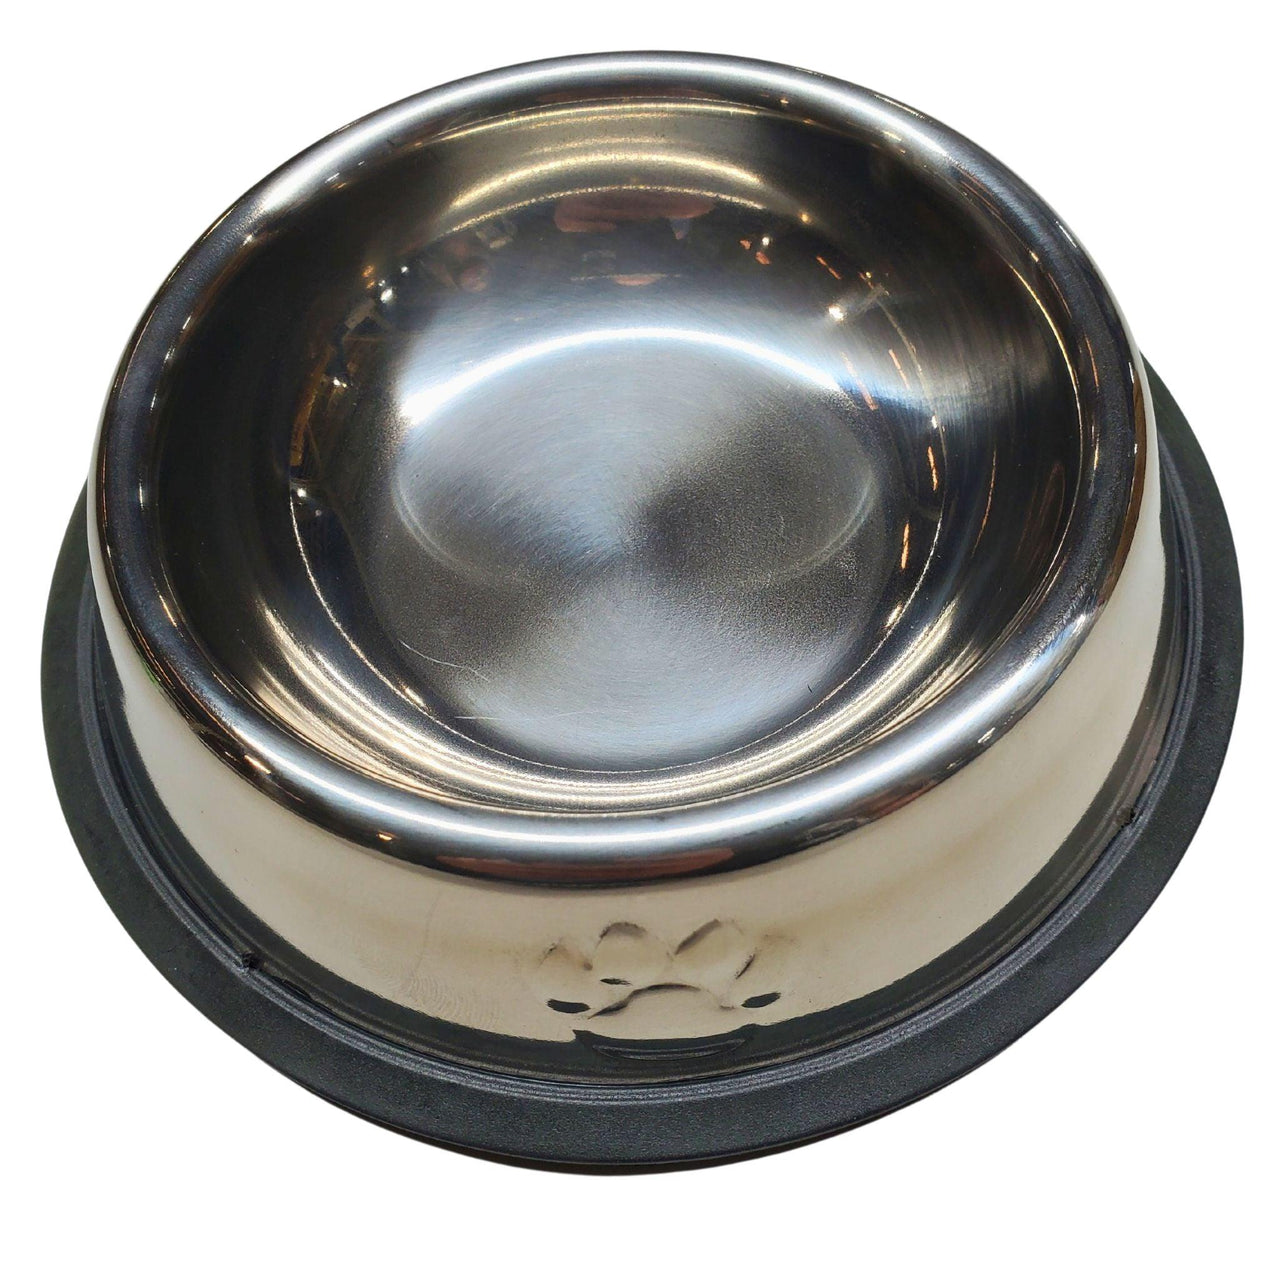 Pardon My Pet Stainless Steel Food Bowl (120 Pcs Lot) - Discount Wholesalers Inc